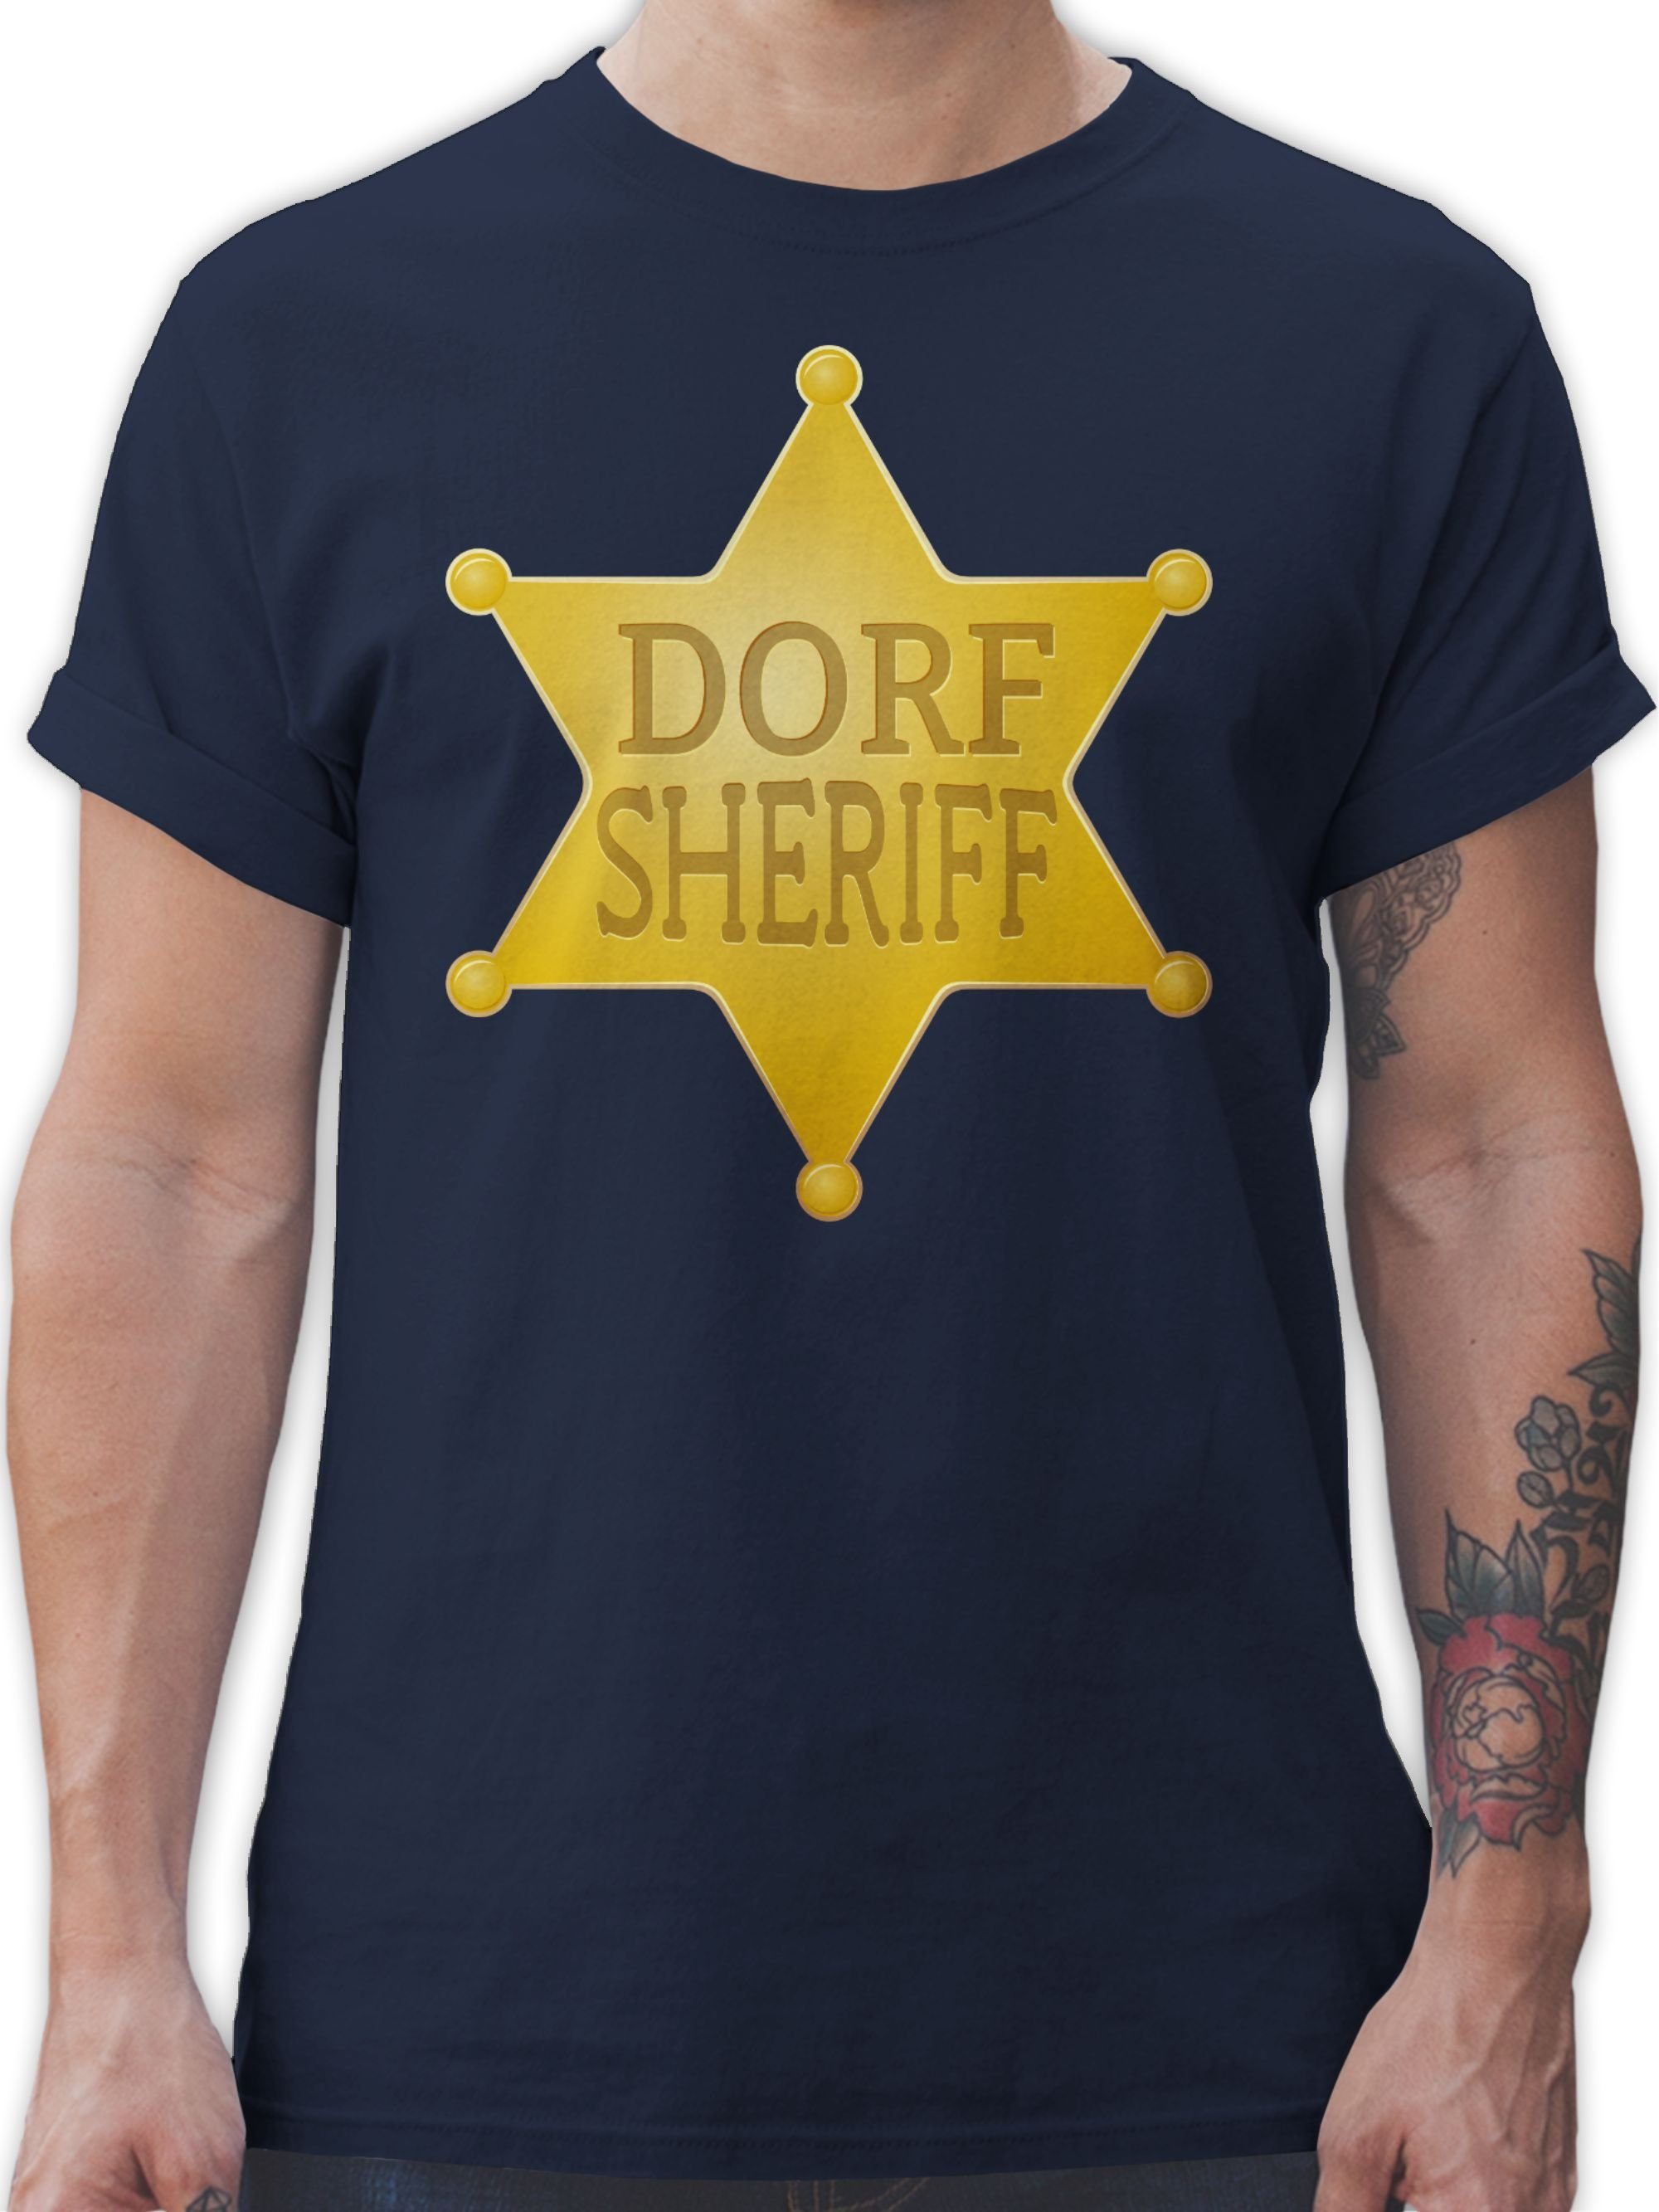 Shirtracer T-Shirt Dorf Sheriff goldener Stern Karneval Outfit 2 Navy Blau